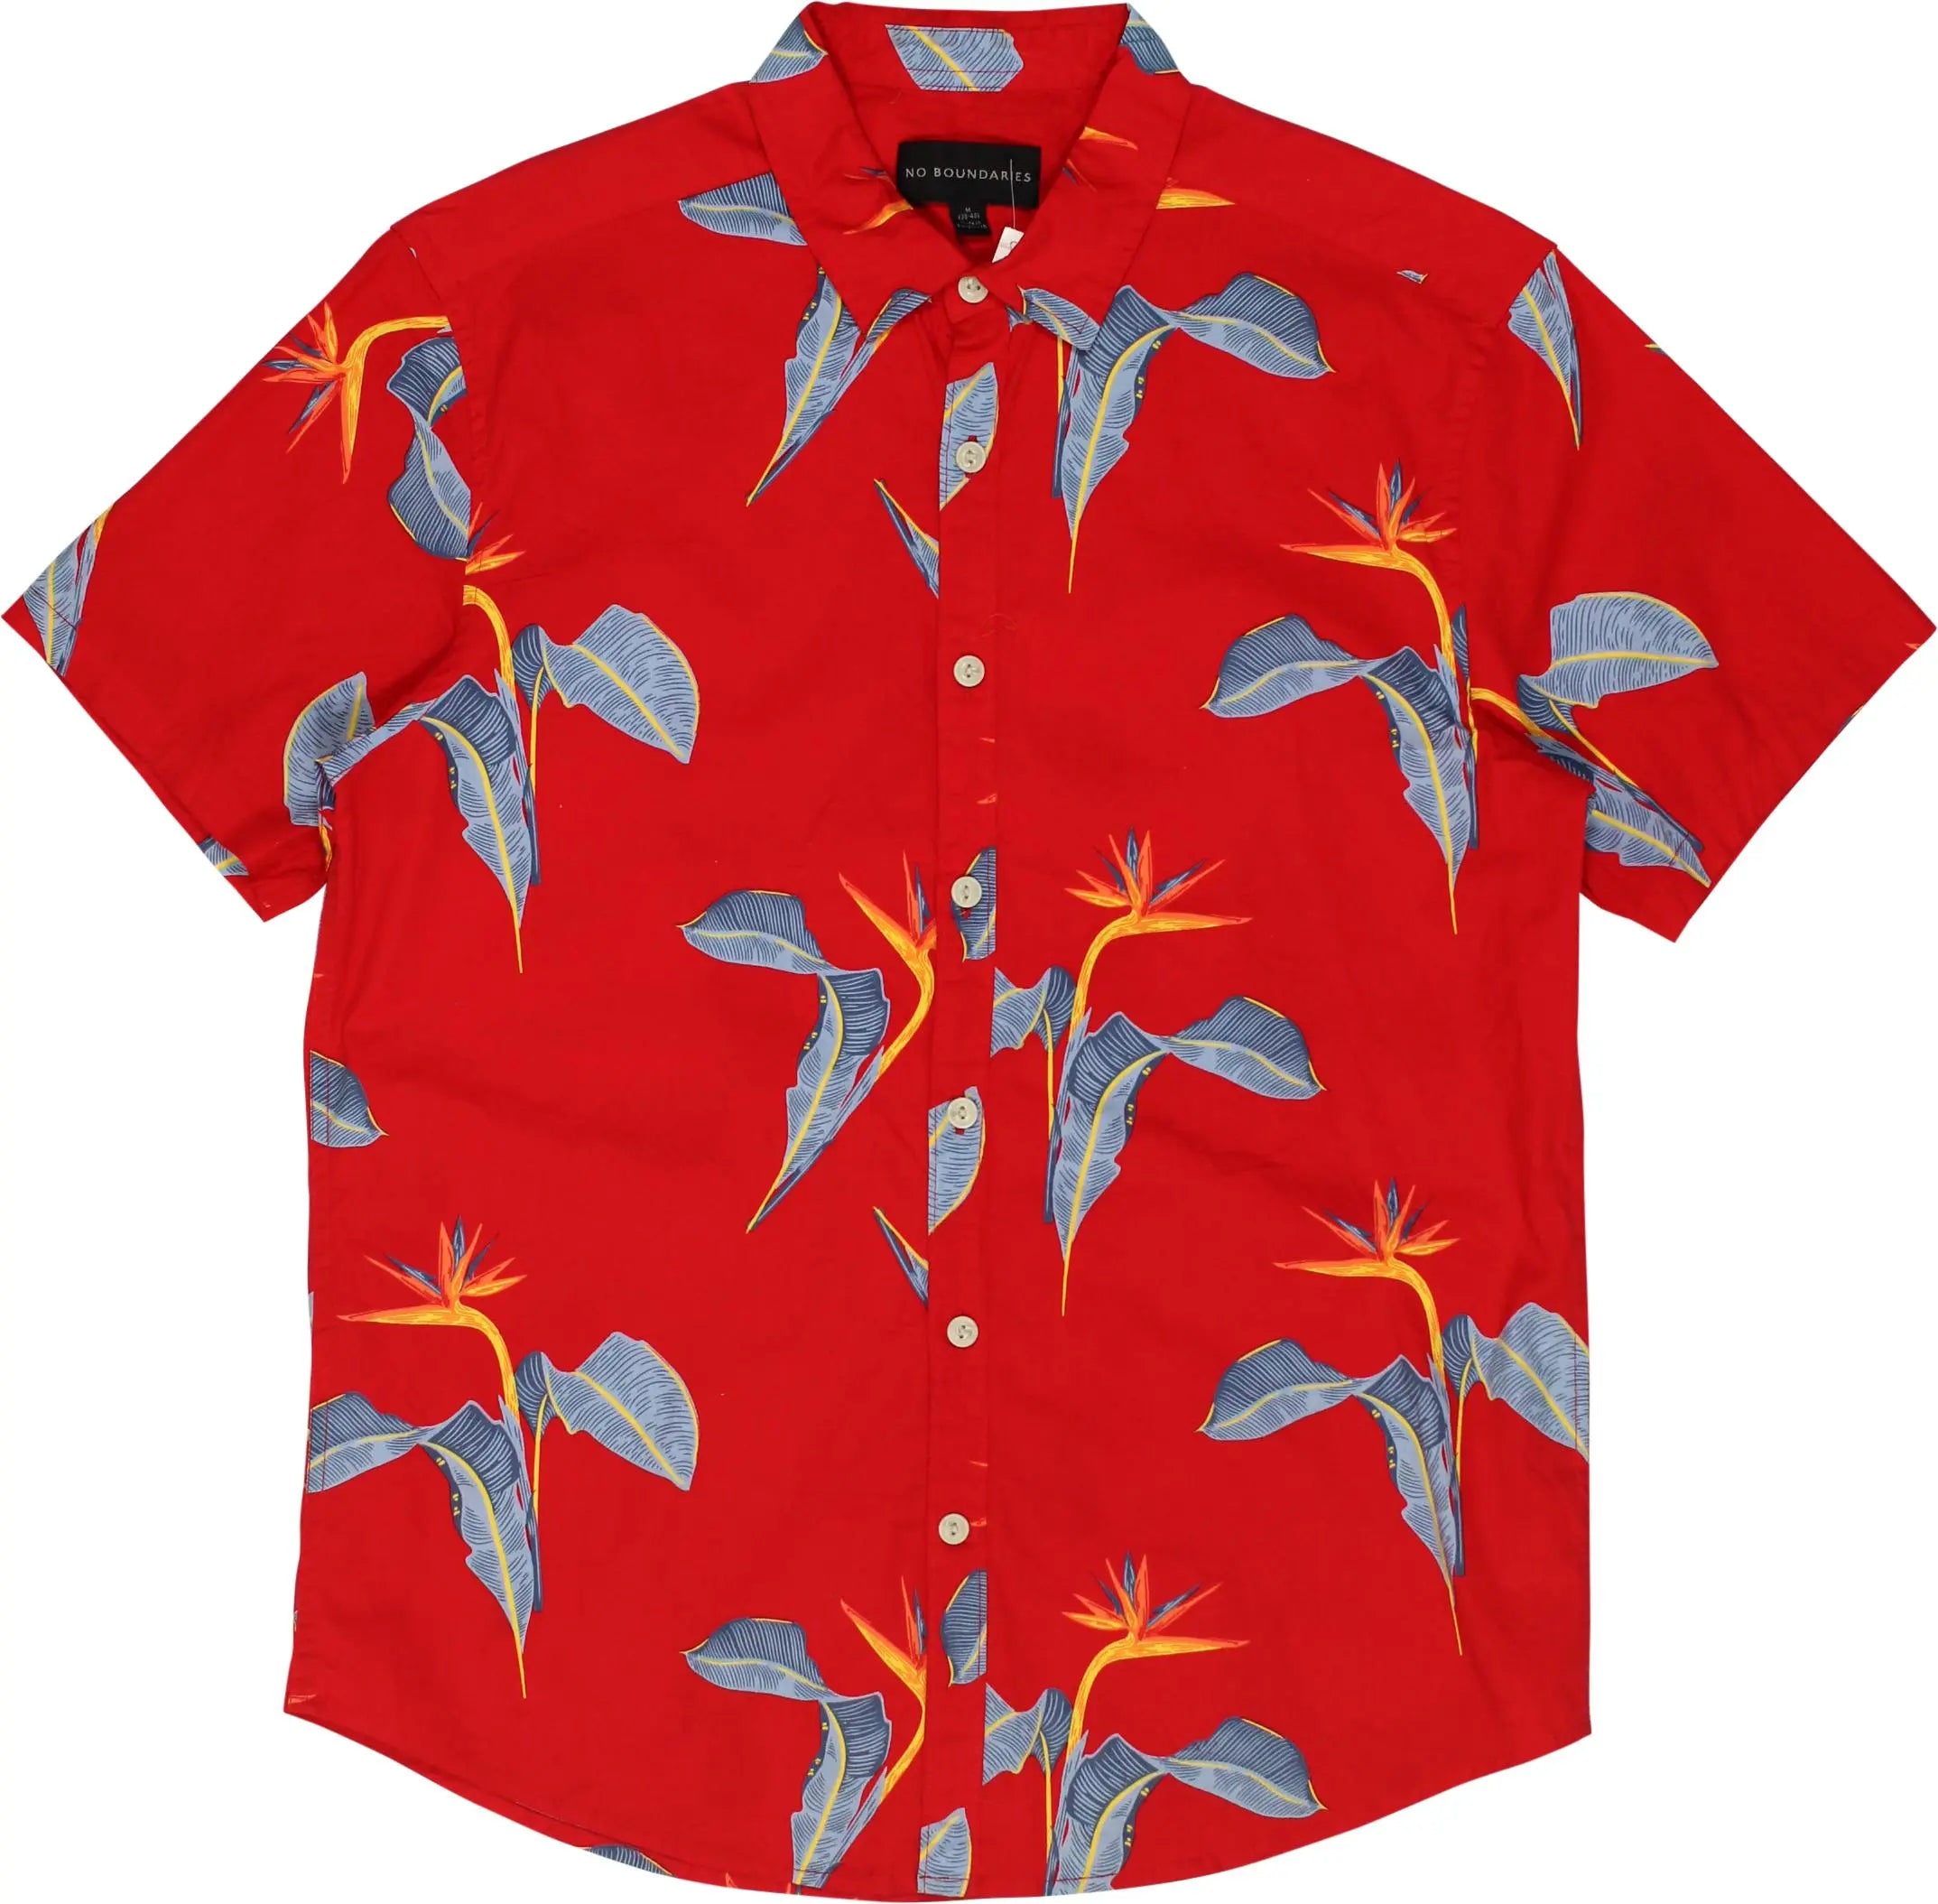 No Boundaries - Hawaiian Shirt- ThriftTale.com - Vintage and second handclothing